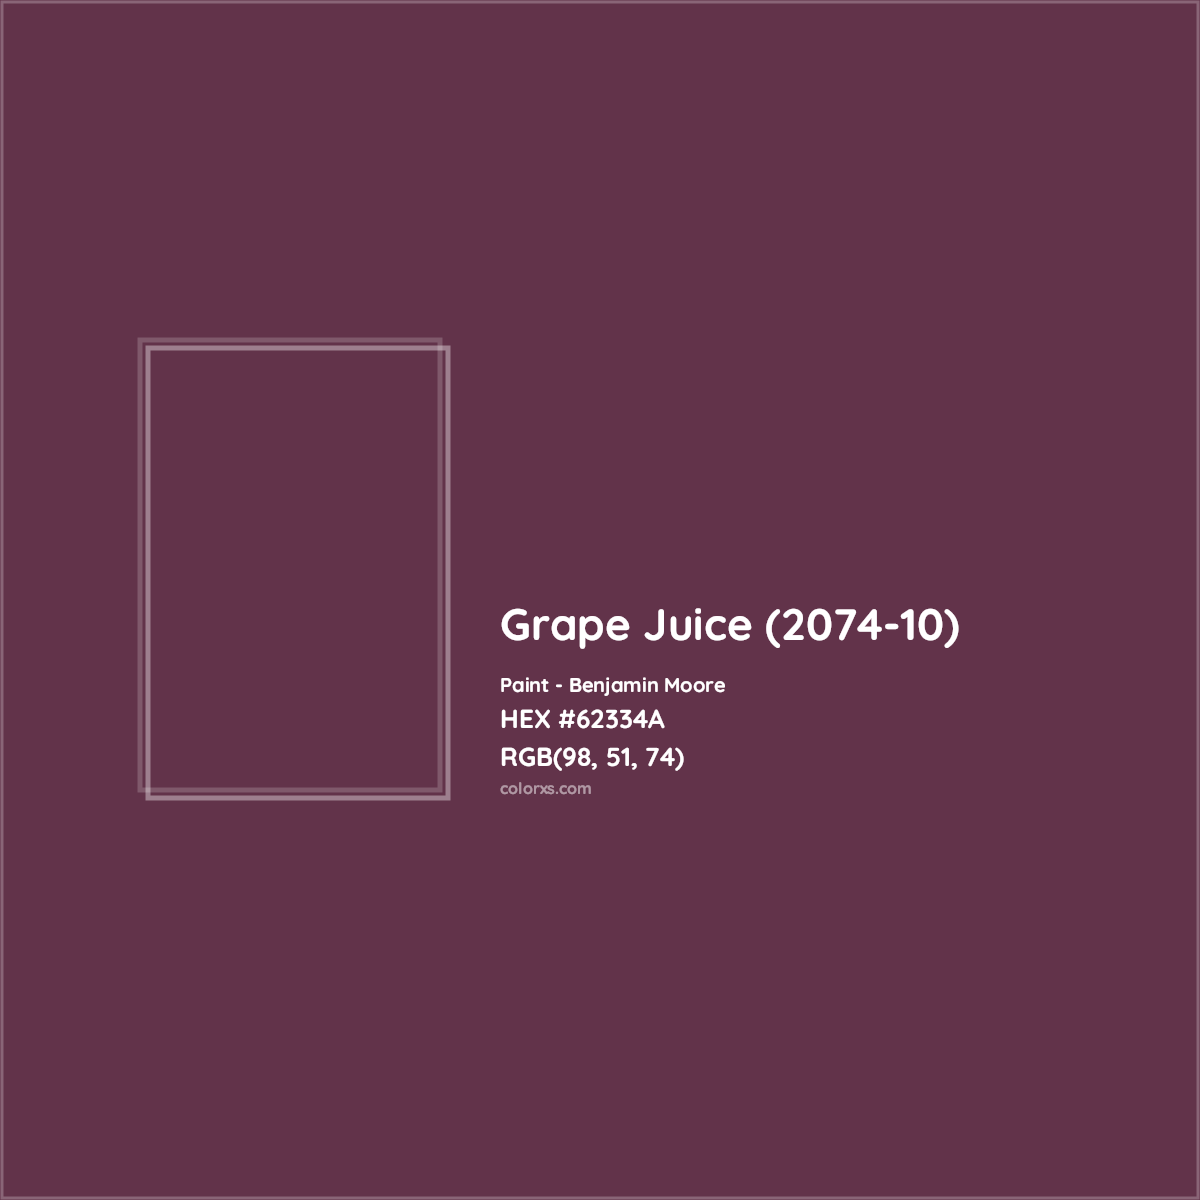 HEX #62334A Grape Juice (2074-10) Paint Benjamin Moore - Color Code